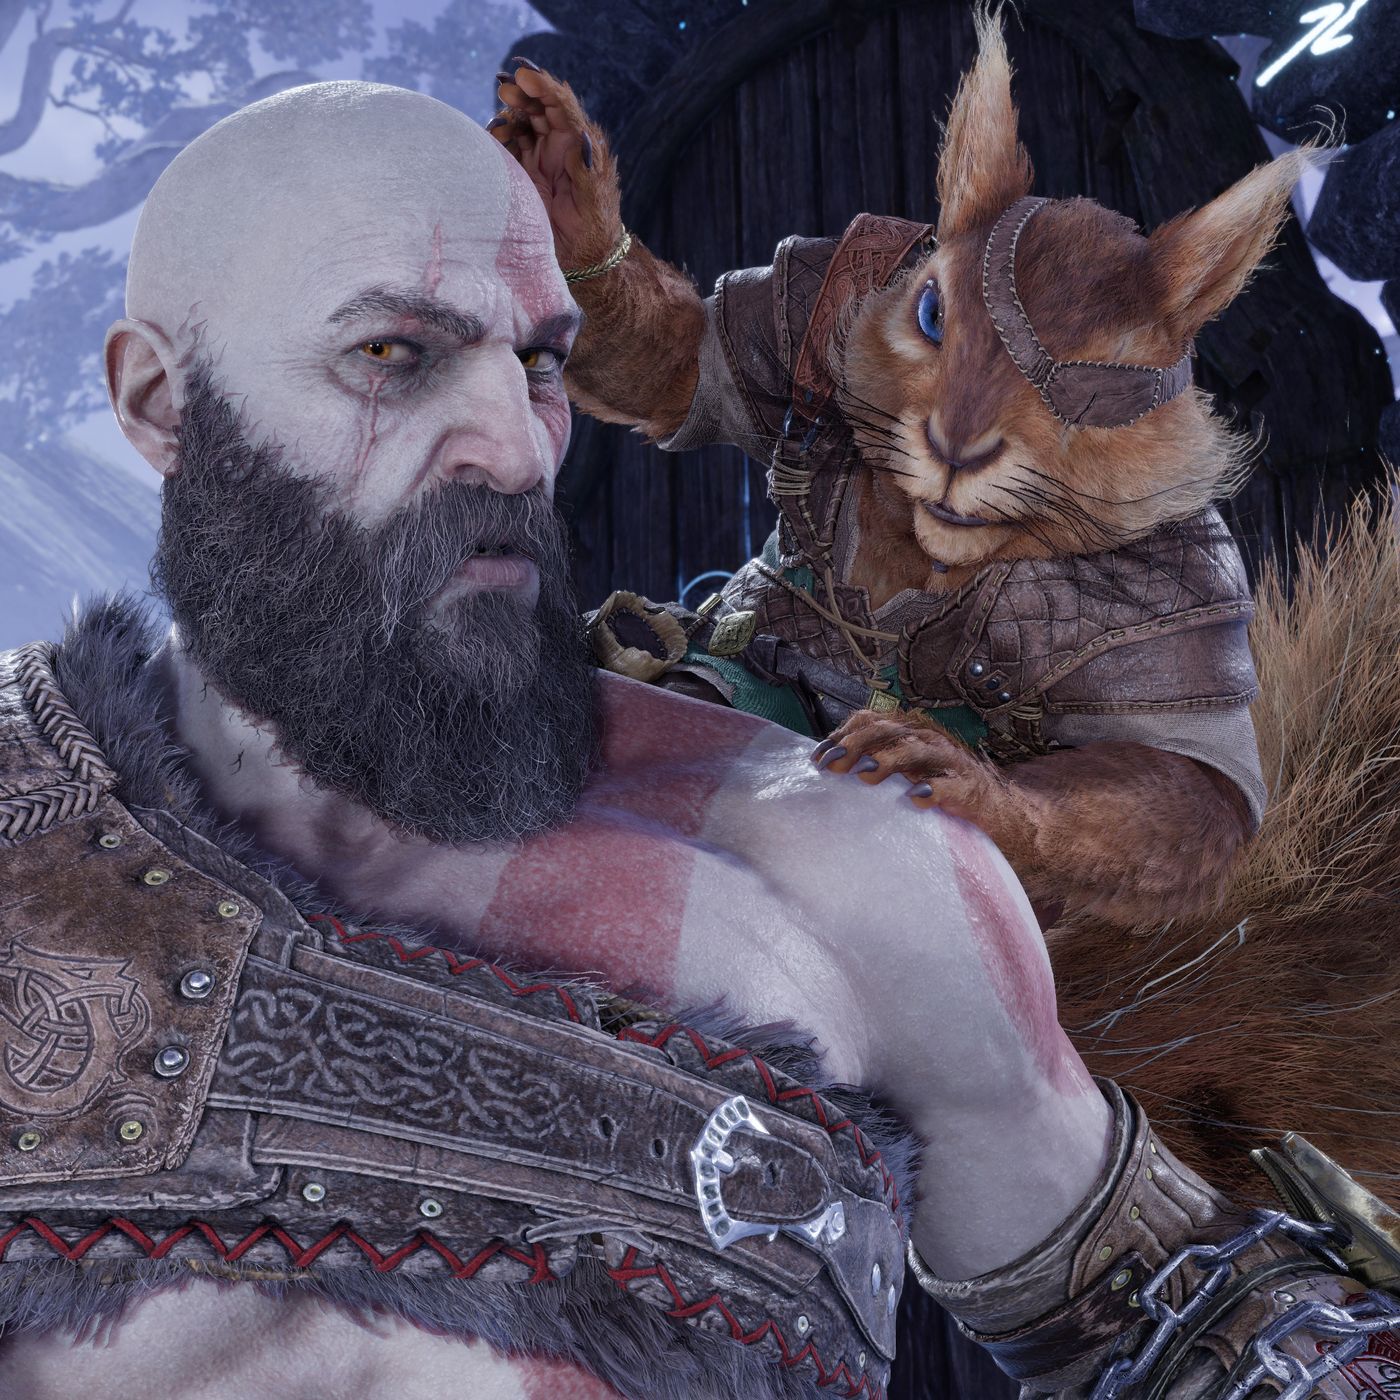 Why God Of War's Kratos Looks So Familiar